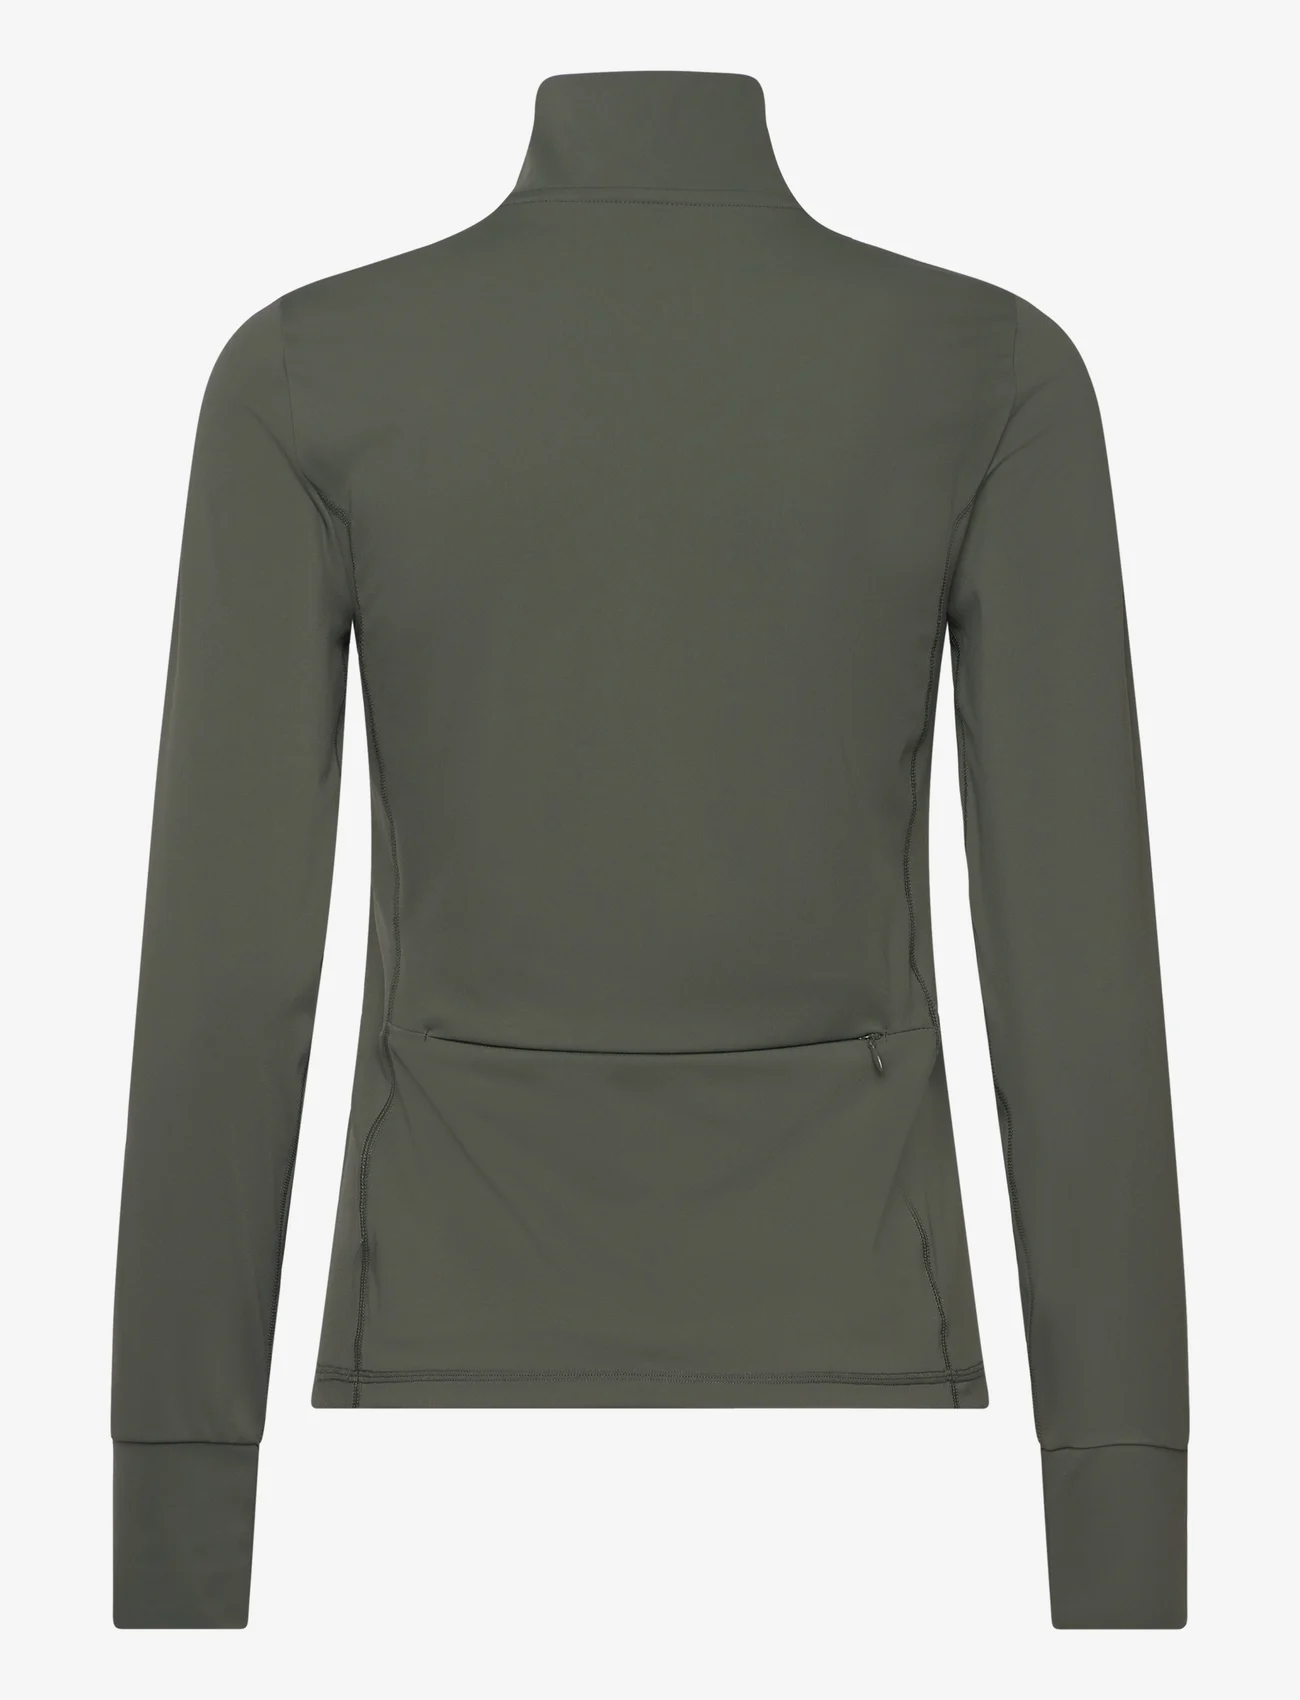 RS Sports - Women’s Stretch Tech Half Zip Sweater - mid layer jackets - deep green - 1